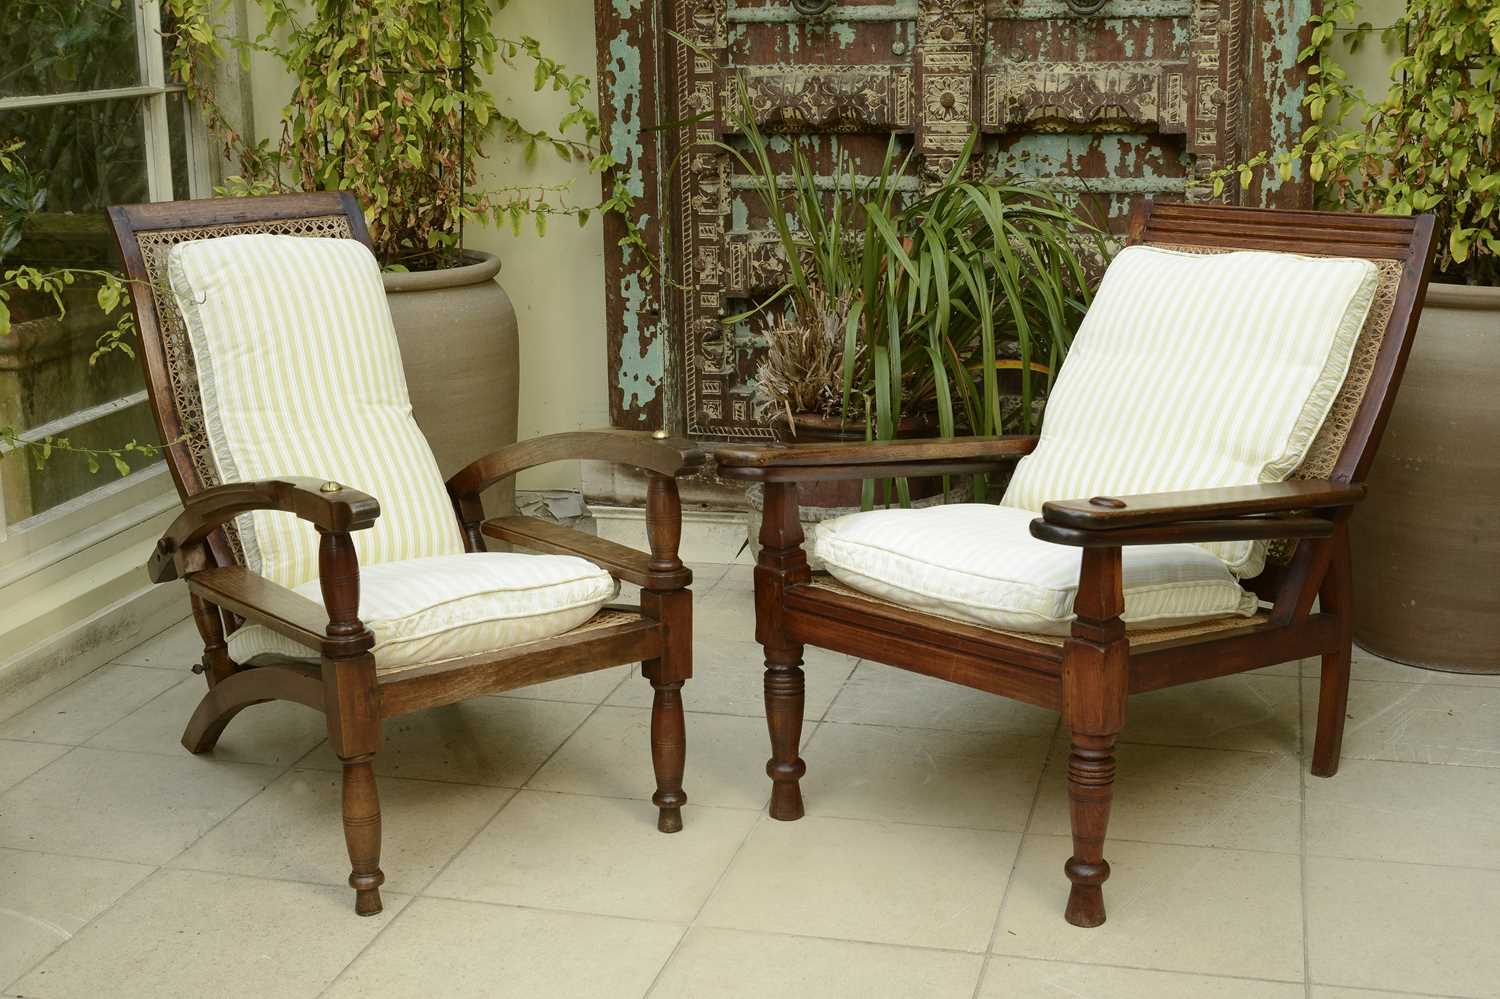 Lot 6 - Two similar teak planter's chairs